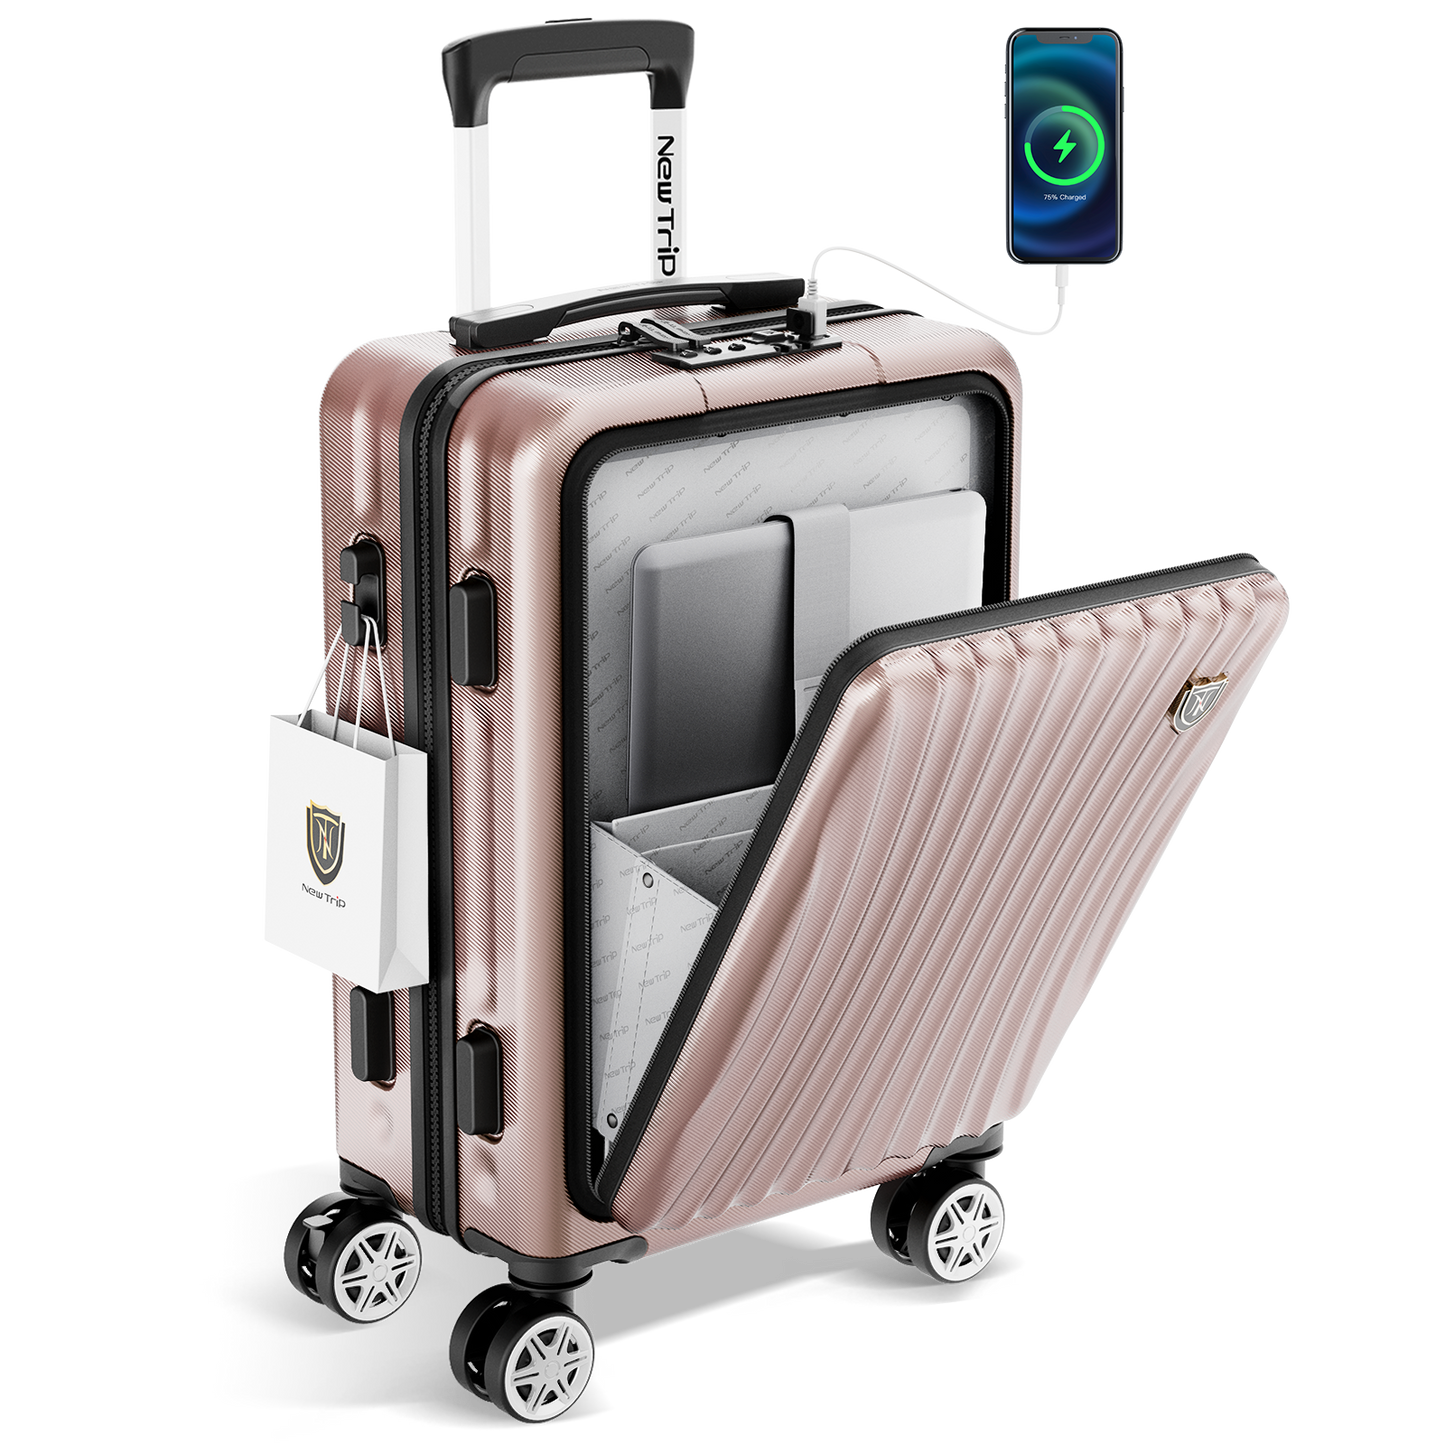 [New Trip] キャリーケース フロントオープン 機内持ち込み ストッパー付き スーツケー USBポート付き TSAロック 1-4泊  40リットル Sサイズ ローズゴールド